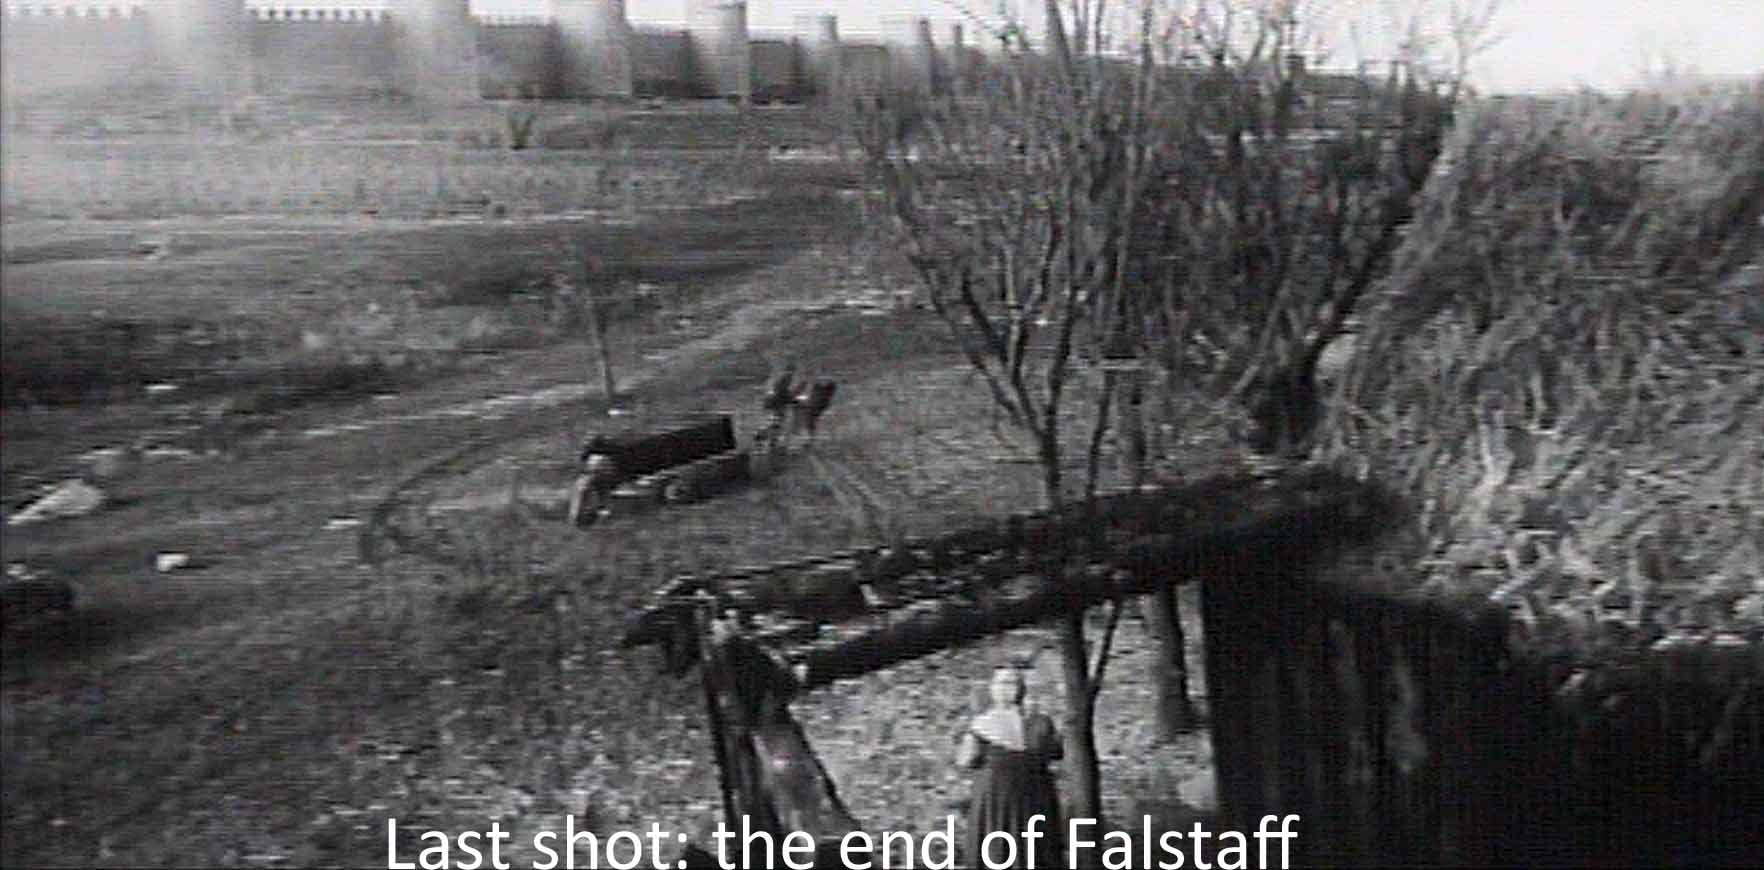 Last shot: the end of Falstaff